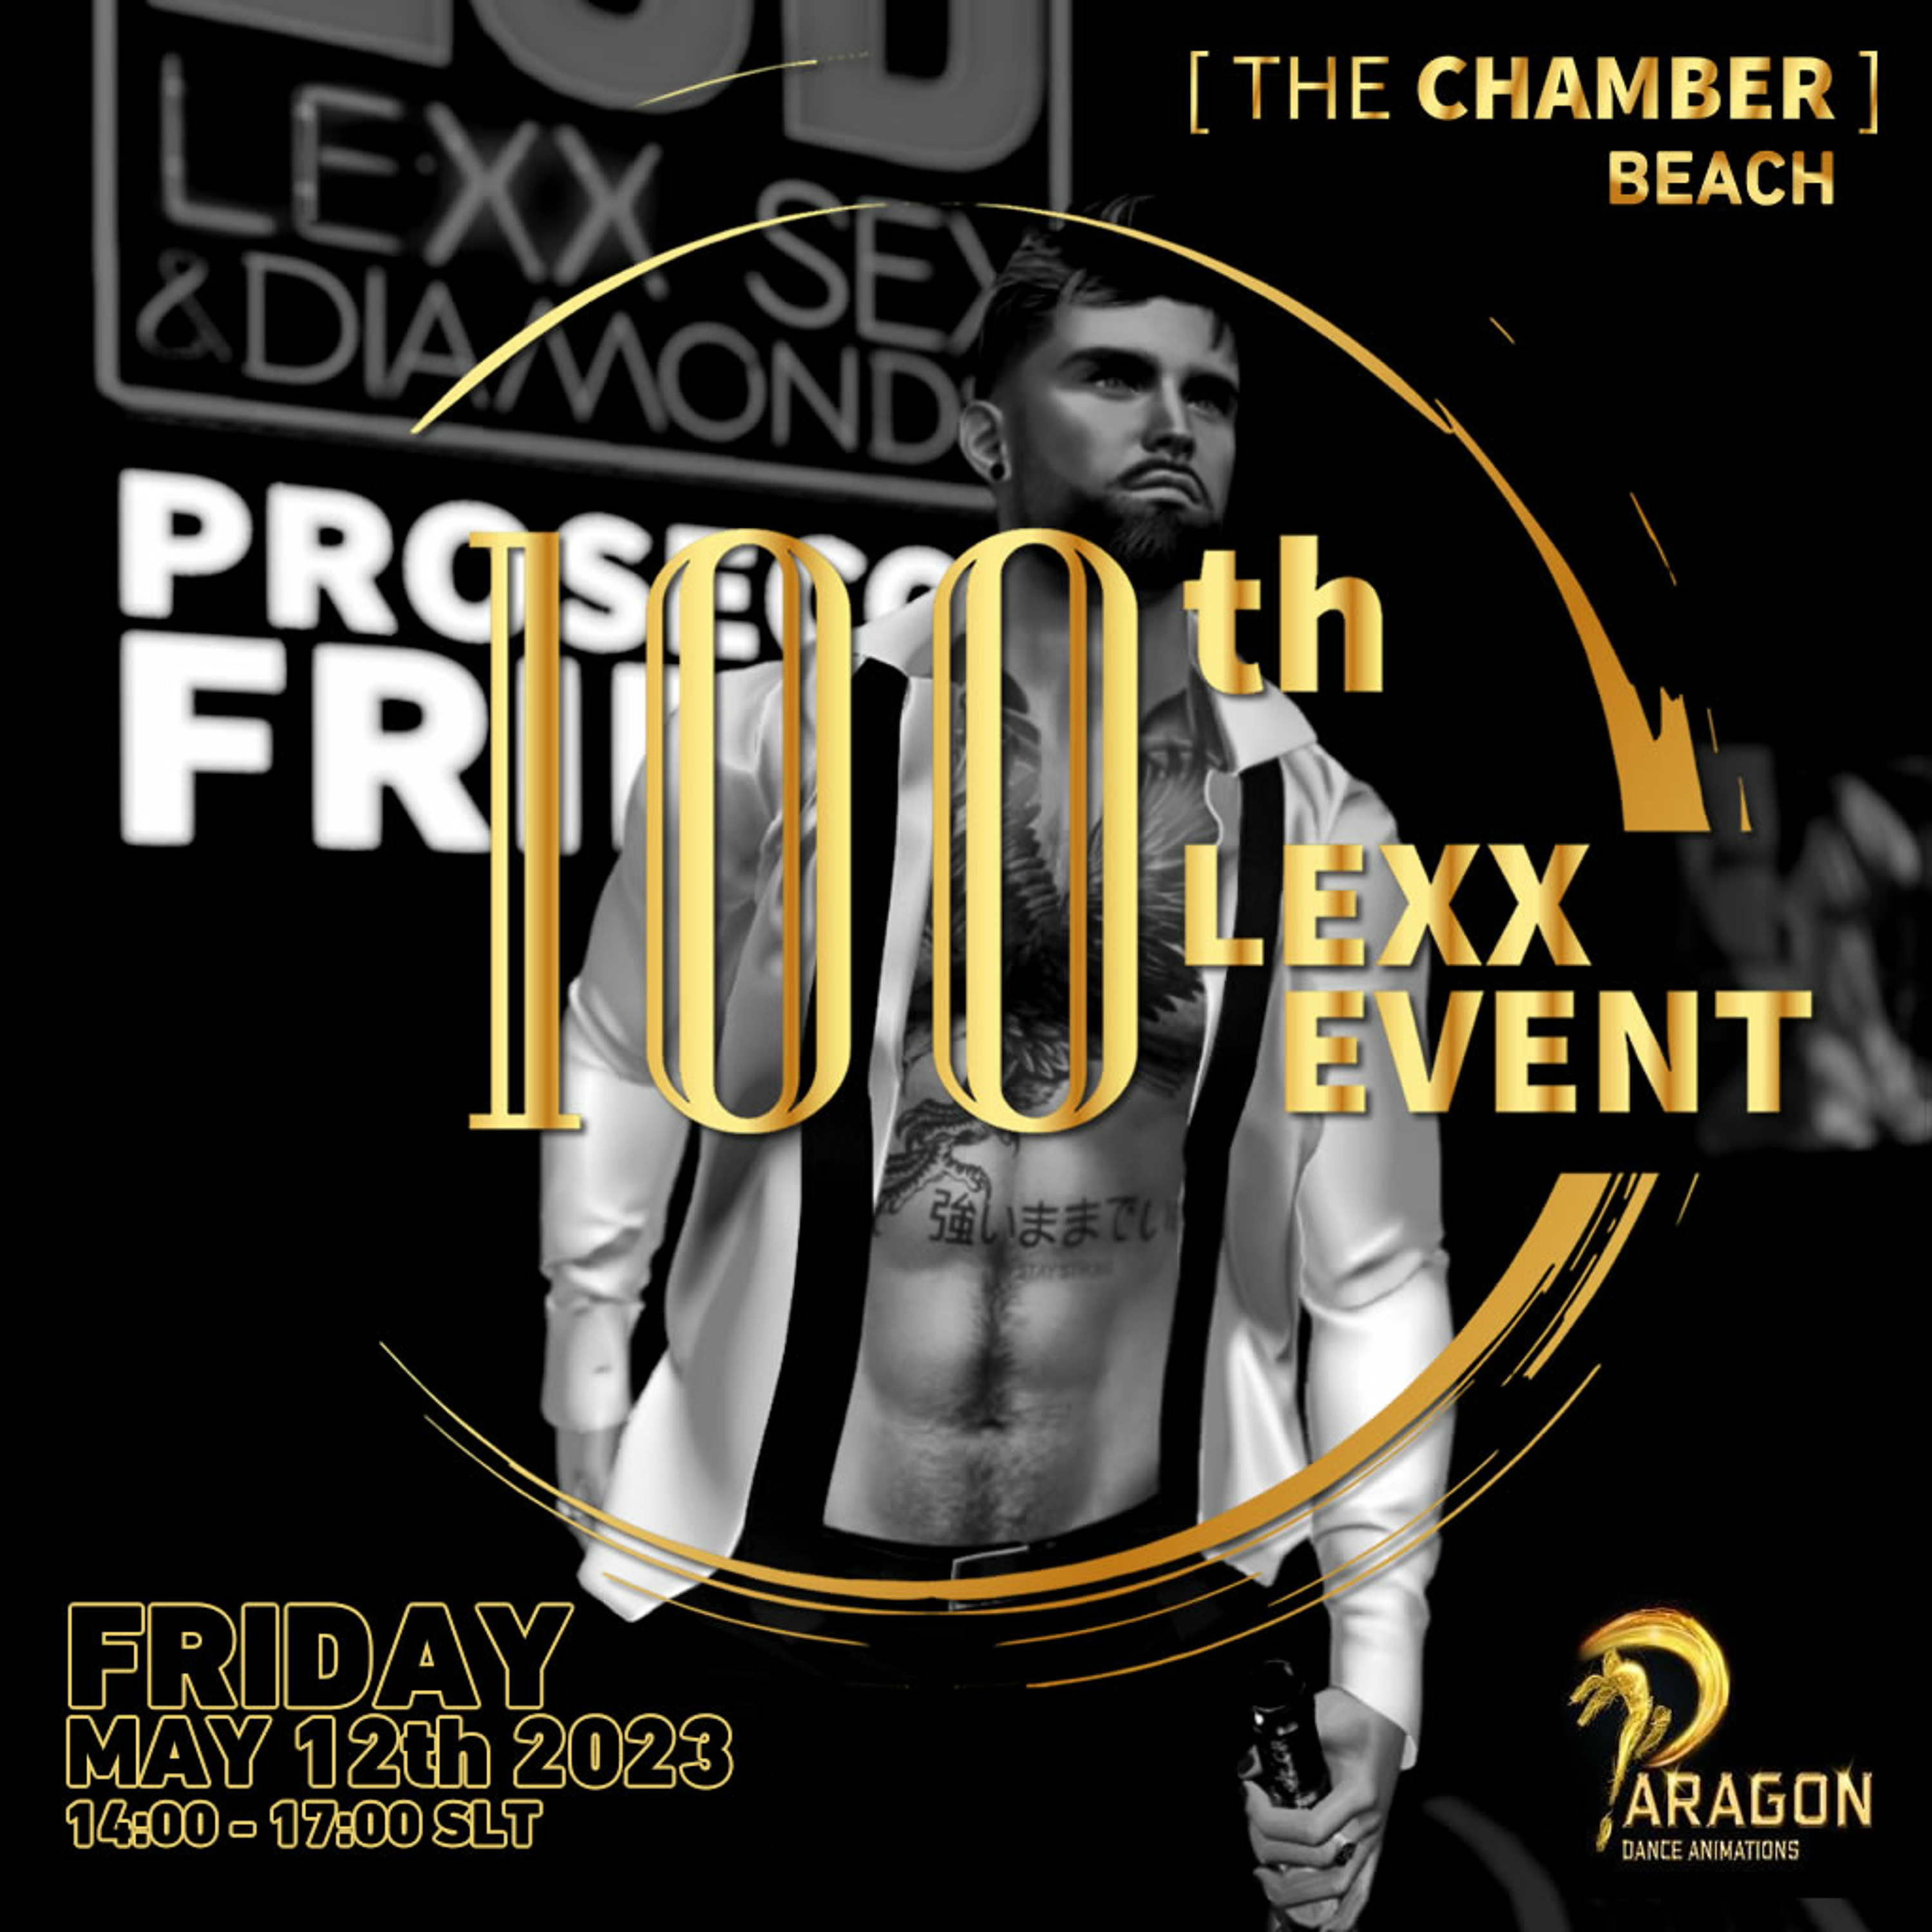 100th Lexxified Friday